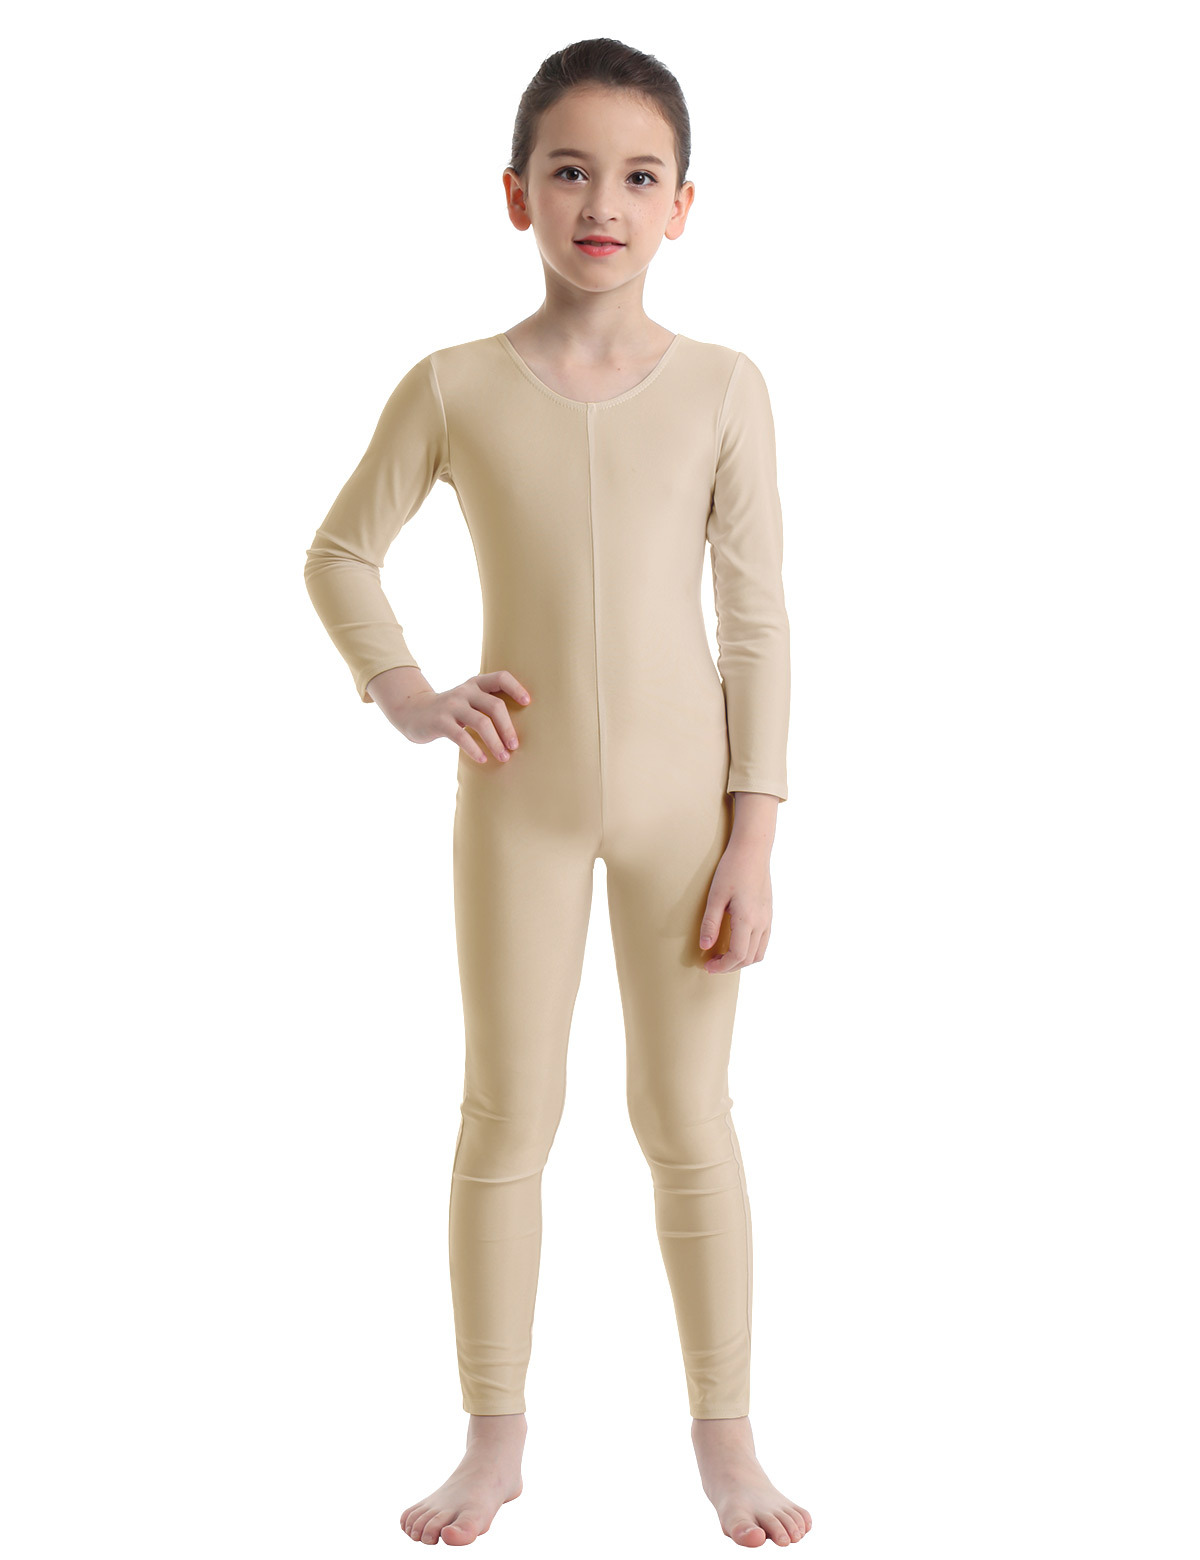 DPOIS Kids Girls Long Sleeve Unitard Leotard Jumpsuit Full Length Bodysuit Nude 11-12 - image 1 of 7